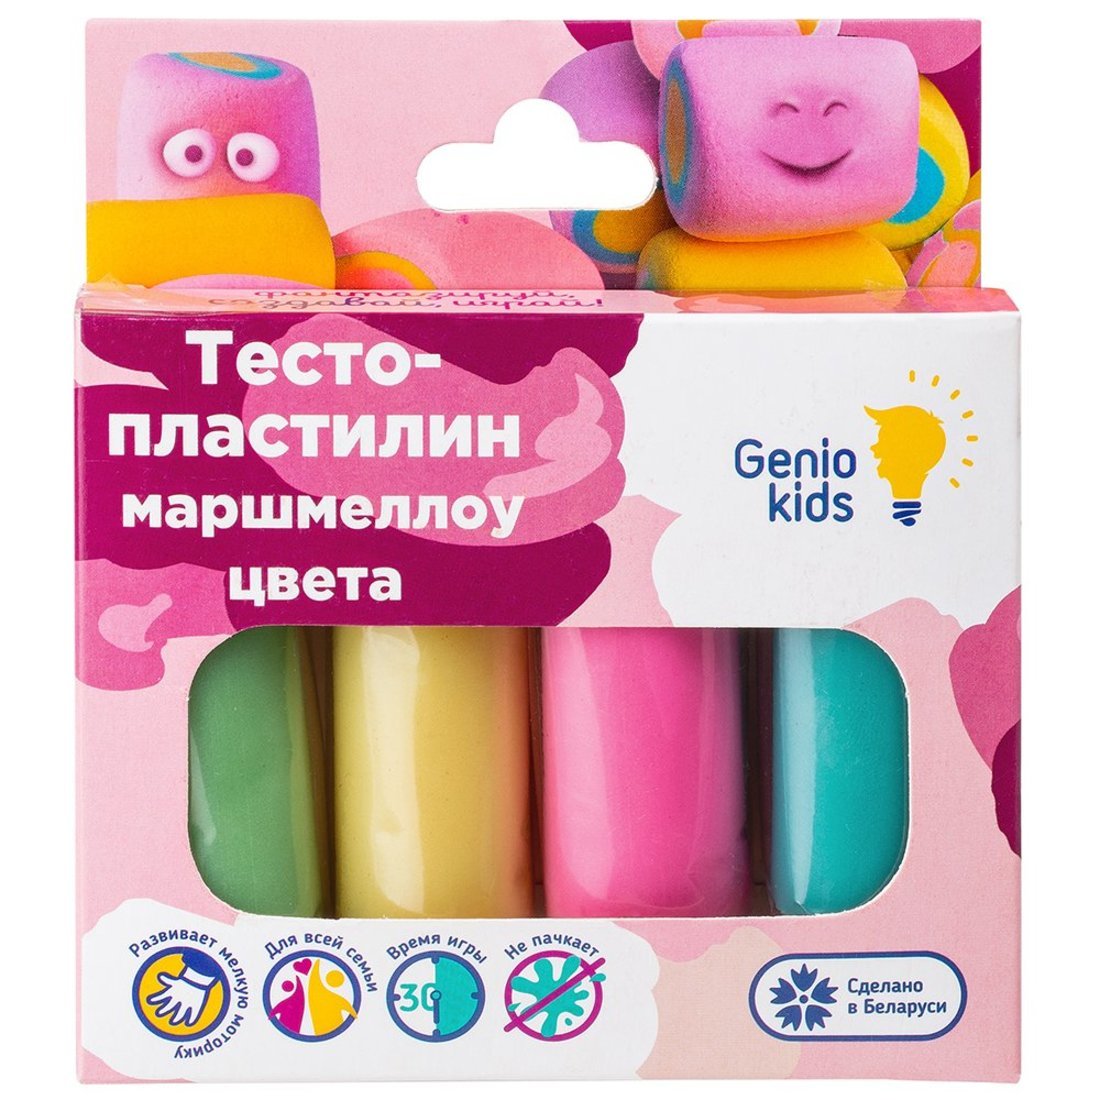 Набор для детской лепки Тесто-пластилин 4 цвета Маршмеллоу цвета GENIO KIDS TA1088V